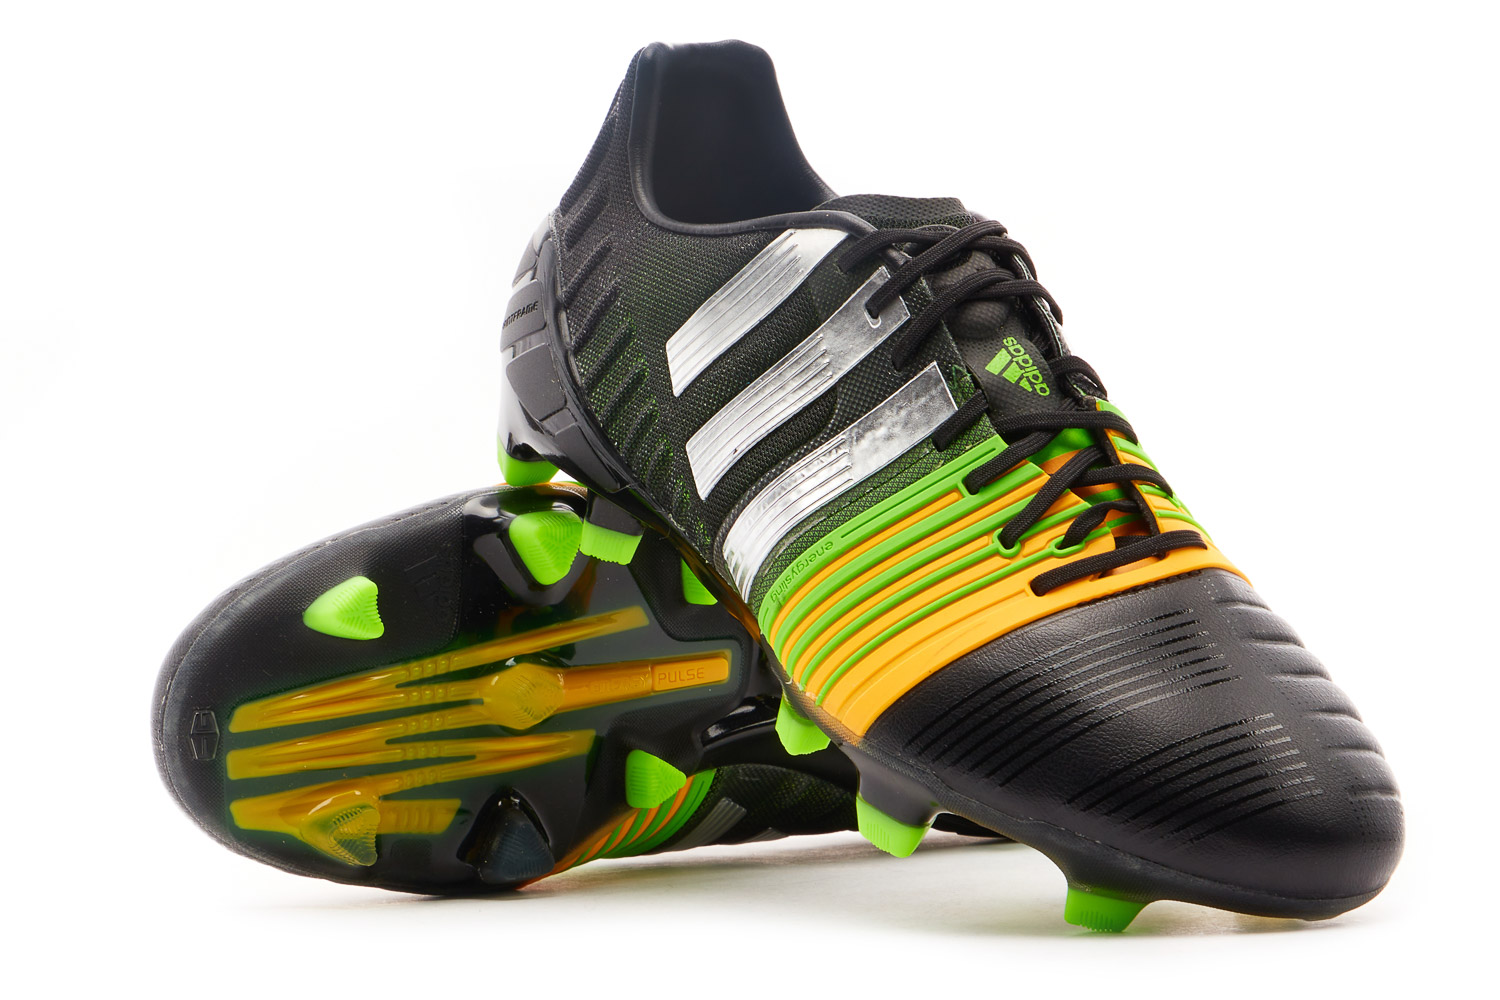 Adidas Nitrocharge 1.0 Football Boots *In FG 7